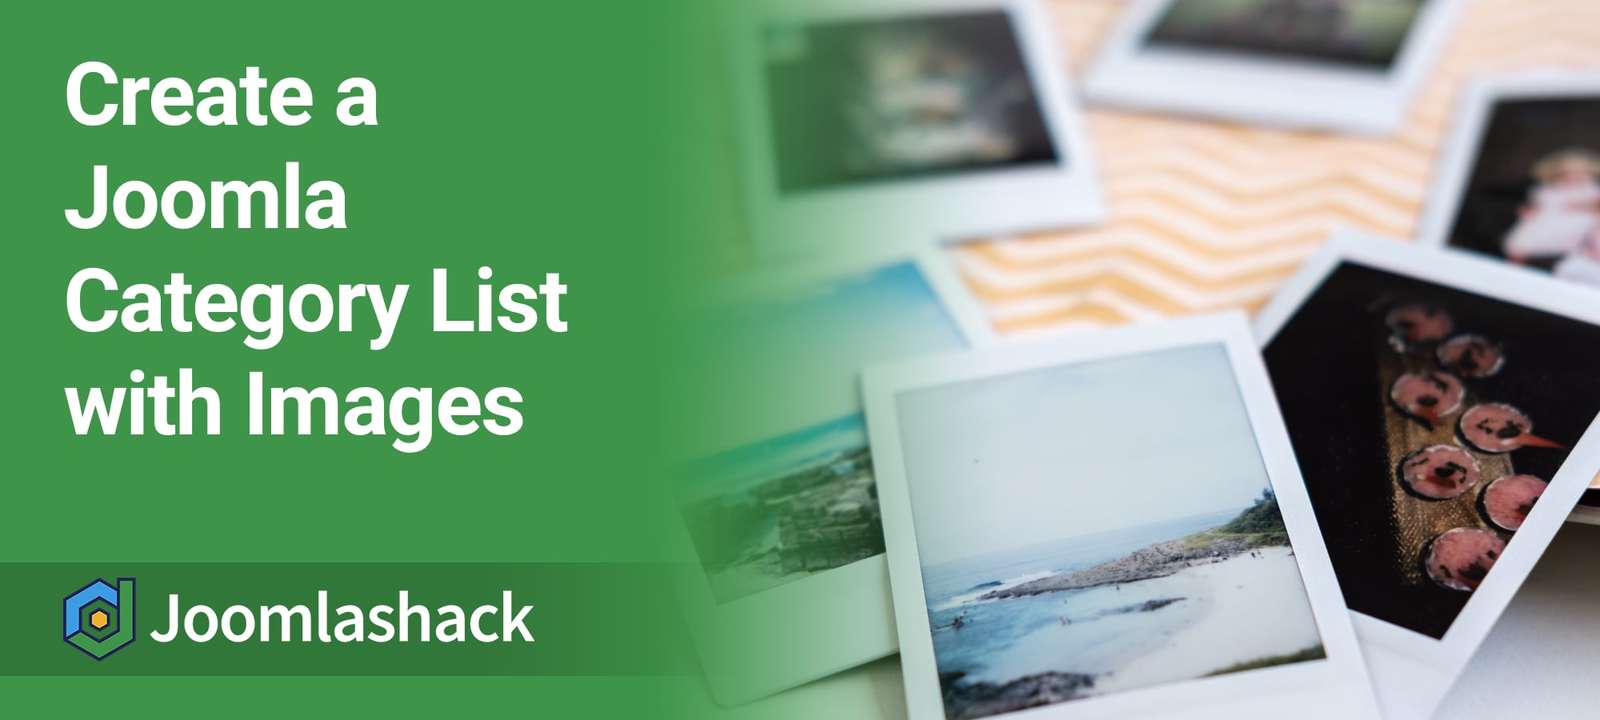 Create a Joomla Category List with ImagesCreate a Joomla Category List with Images